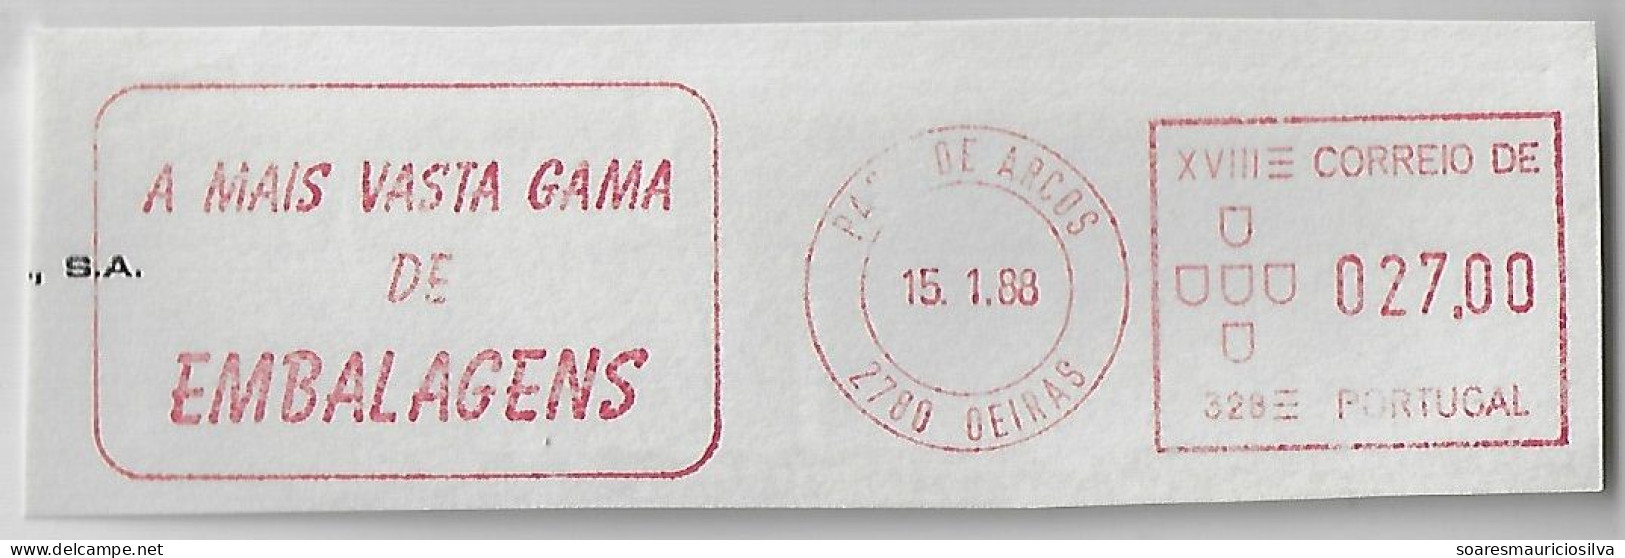 Portugal 1988 Fragment Meter Stamp Hasler Mailmaster Slogan The Widest Range Of Packaging Oeiras Paço De Arcos - Covers & Documents